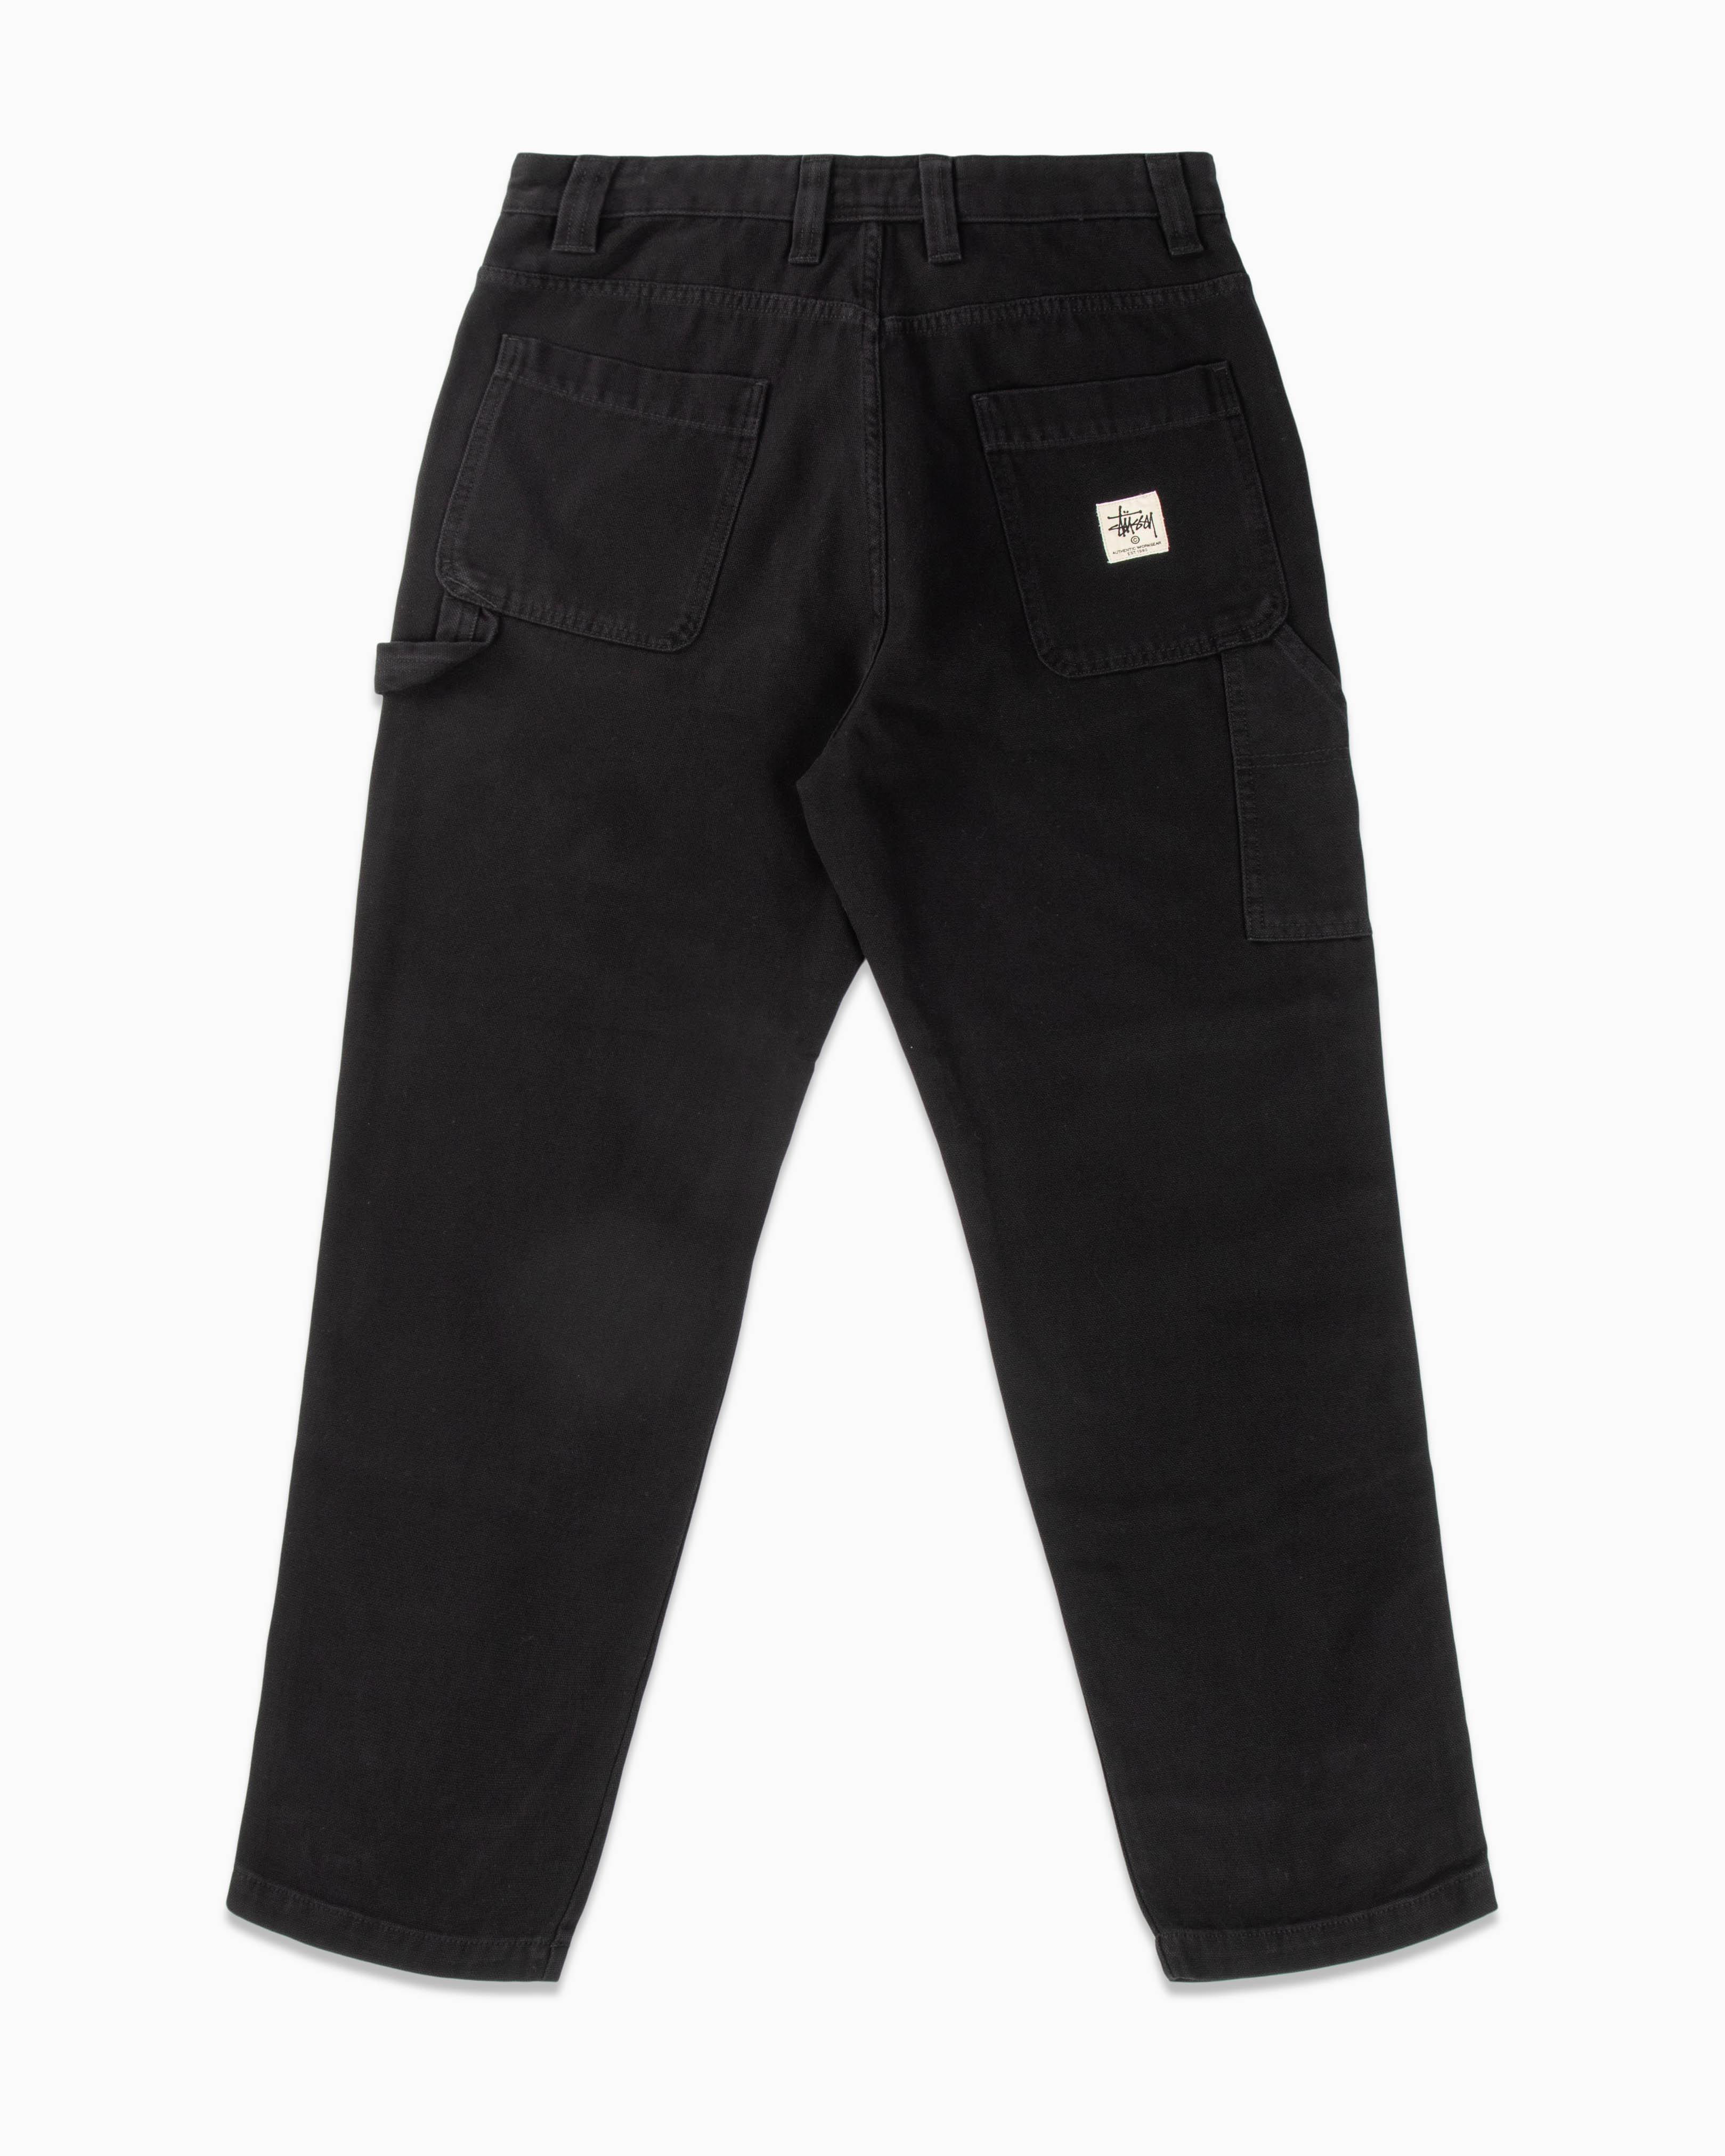 Snickers Workwear U6214 RuffWork Canvas Work Pants + Holster Pockets -